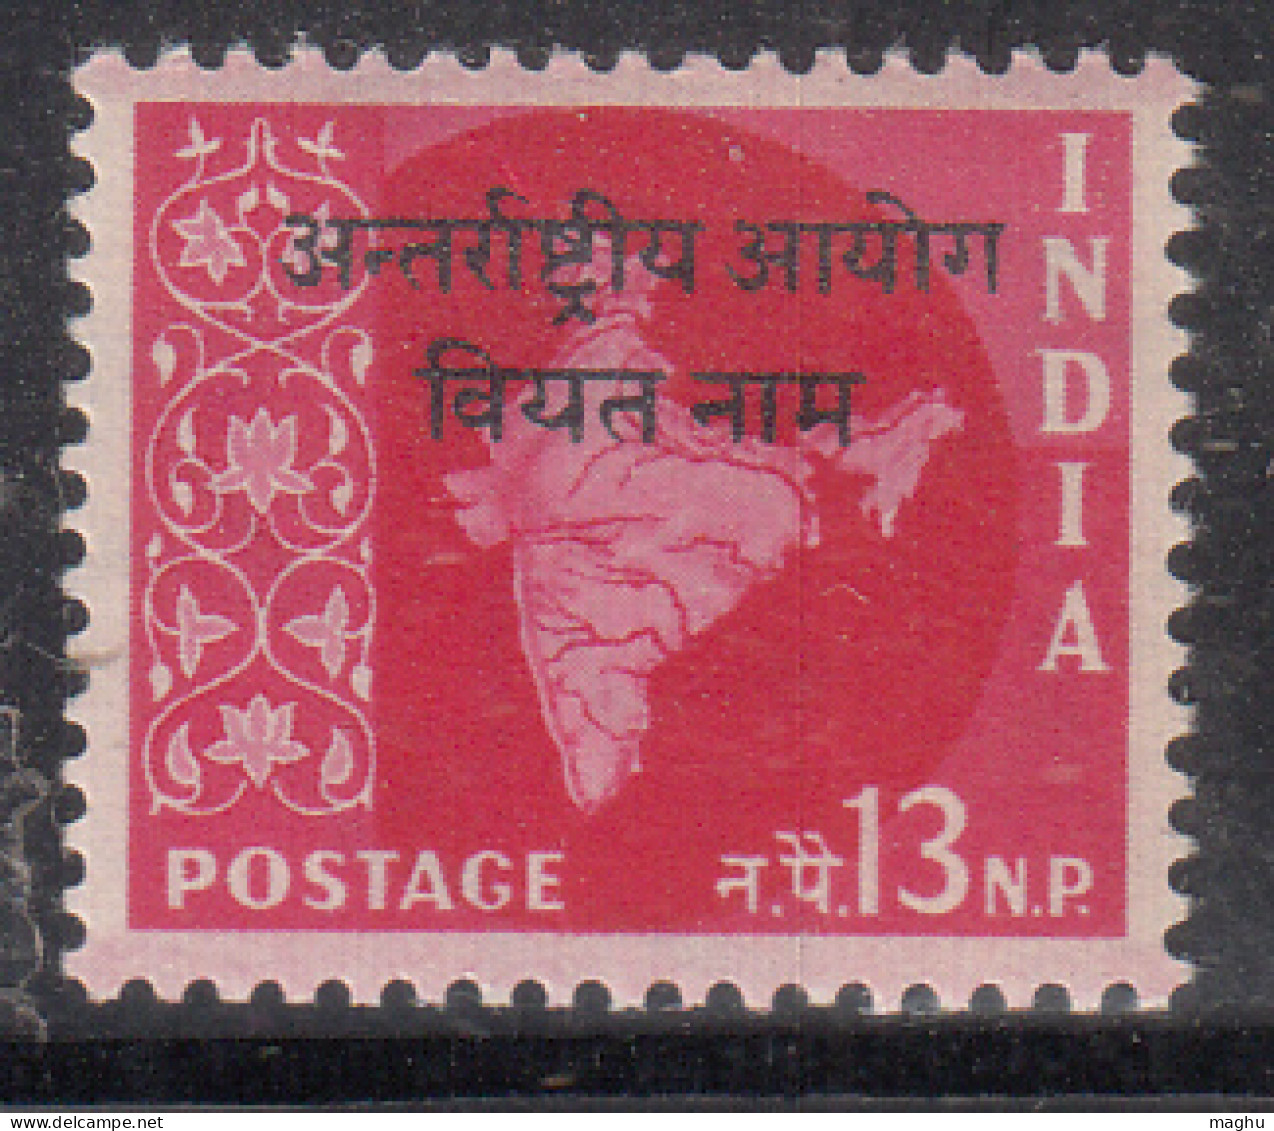 13p Oveperprint Of 'Vietnam' On Map Series, Watermark Star, India MNH 1957 - Unused Stamps